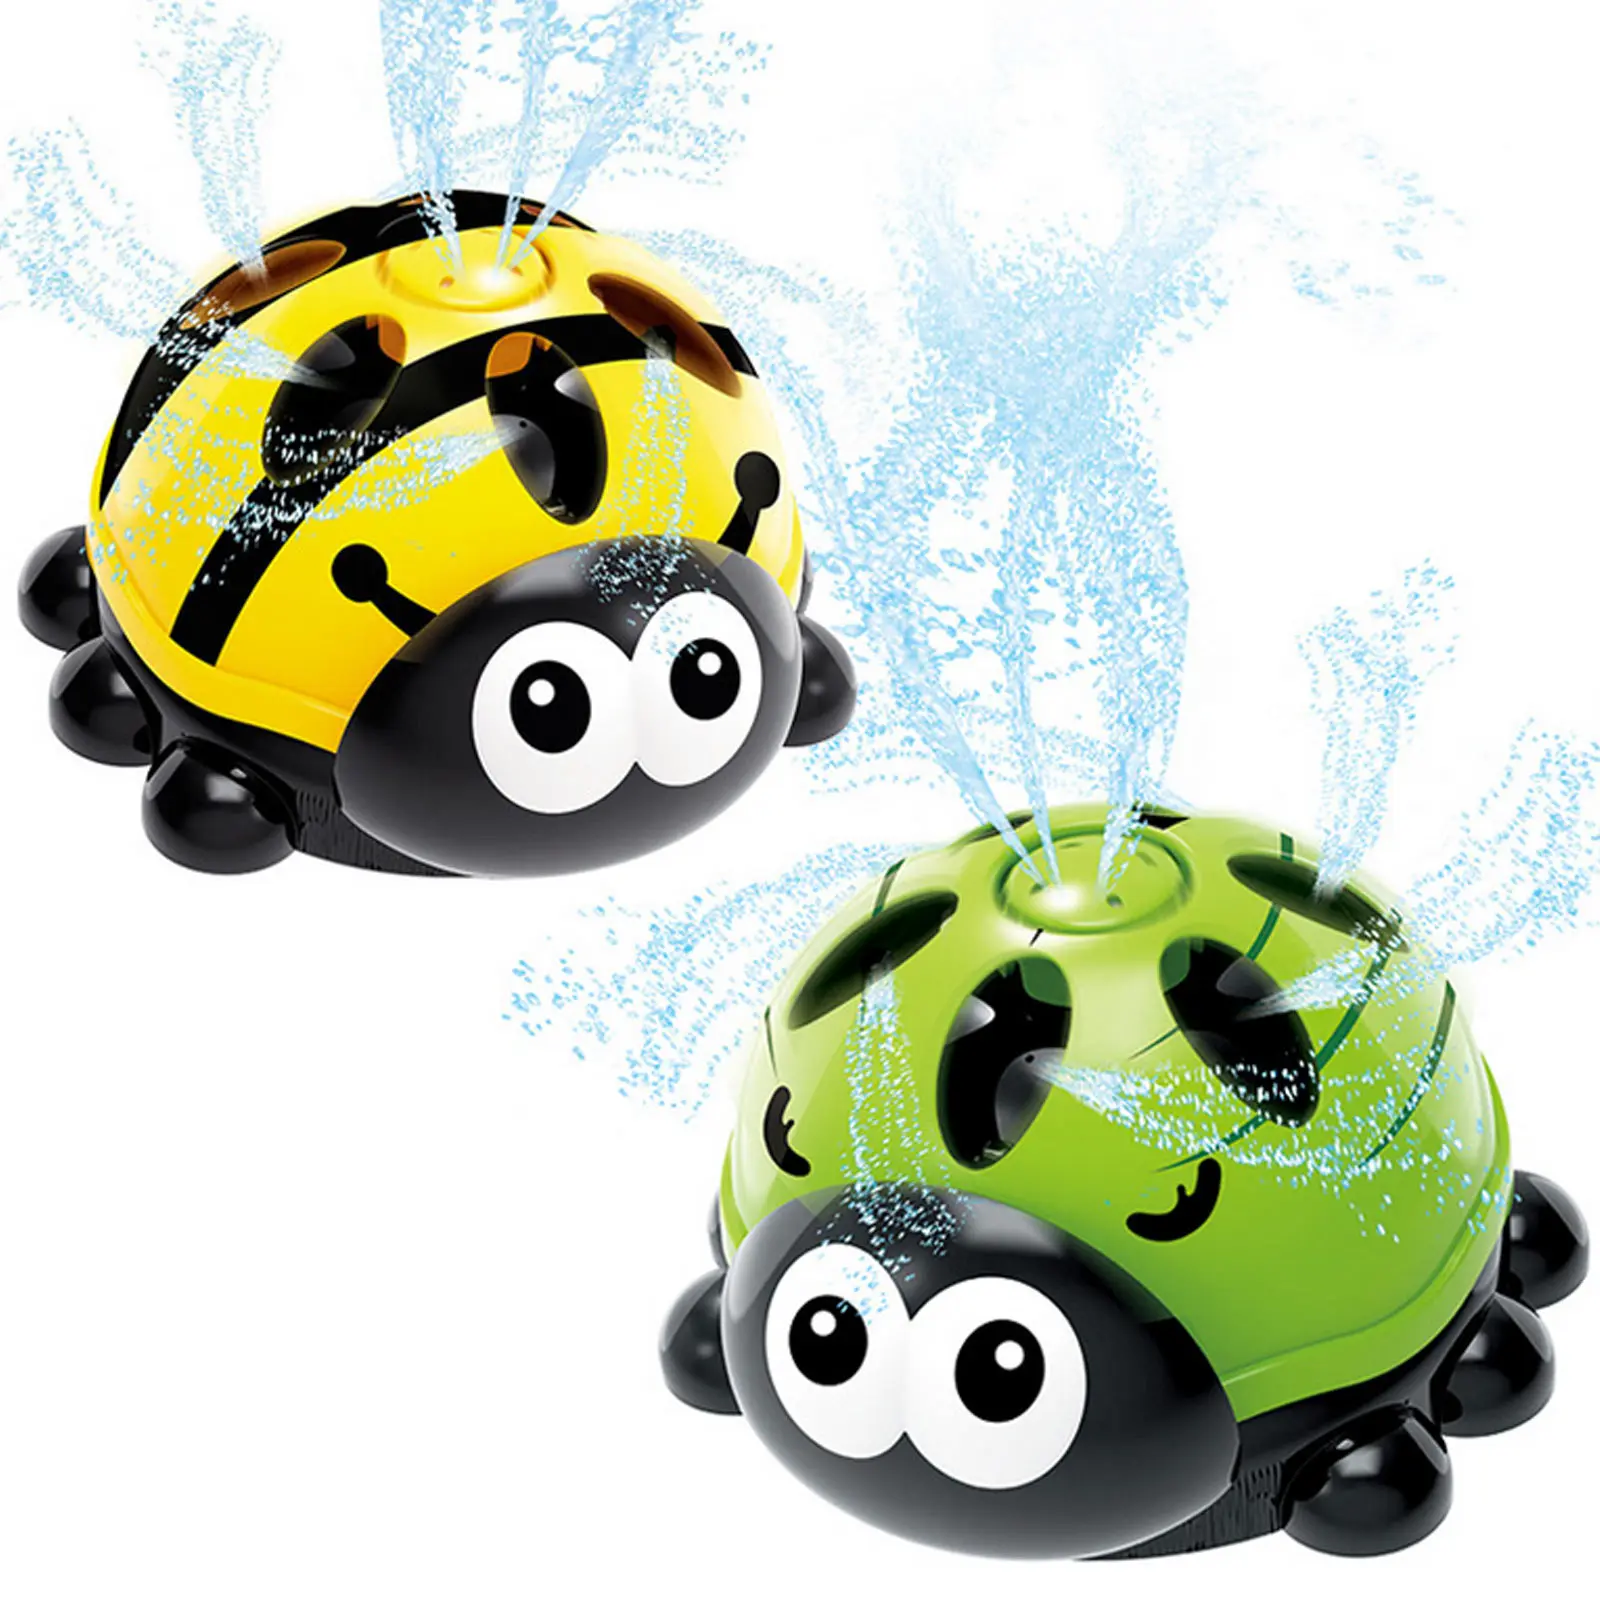 Cute Ladybug Water Spray Splash Sprinkler Toy for Kids Toddlers Summer Outdoor Lawn Backyard Water Fun Toy